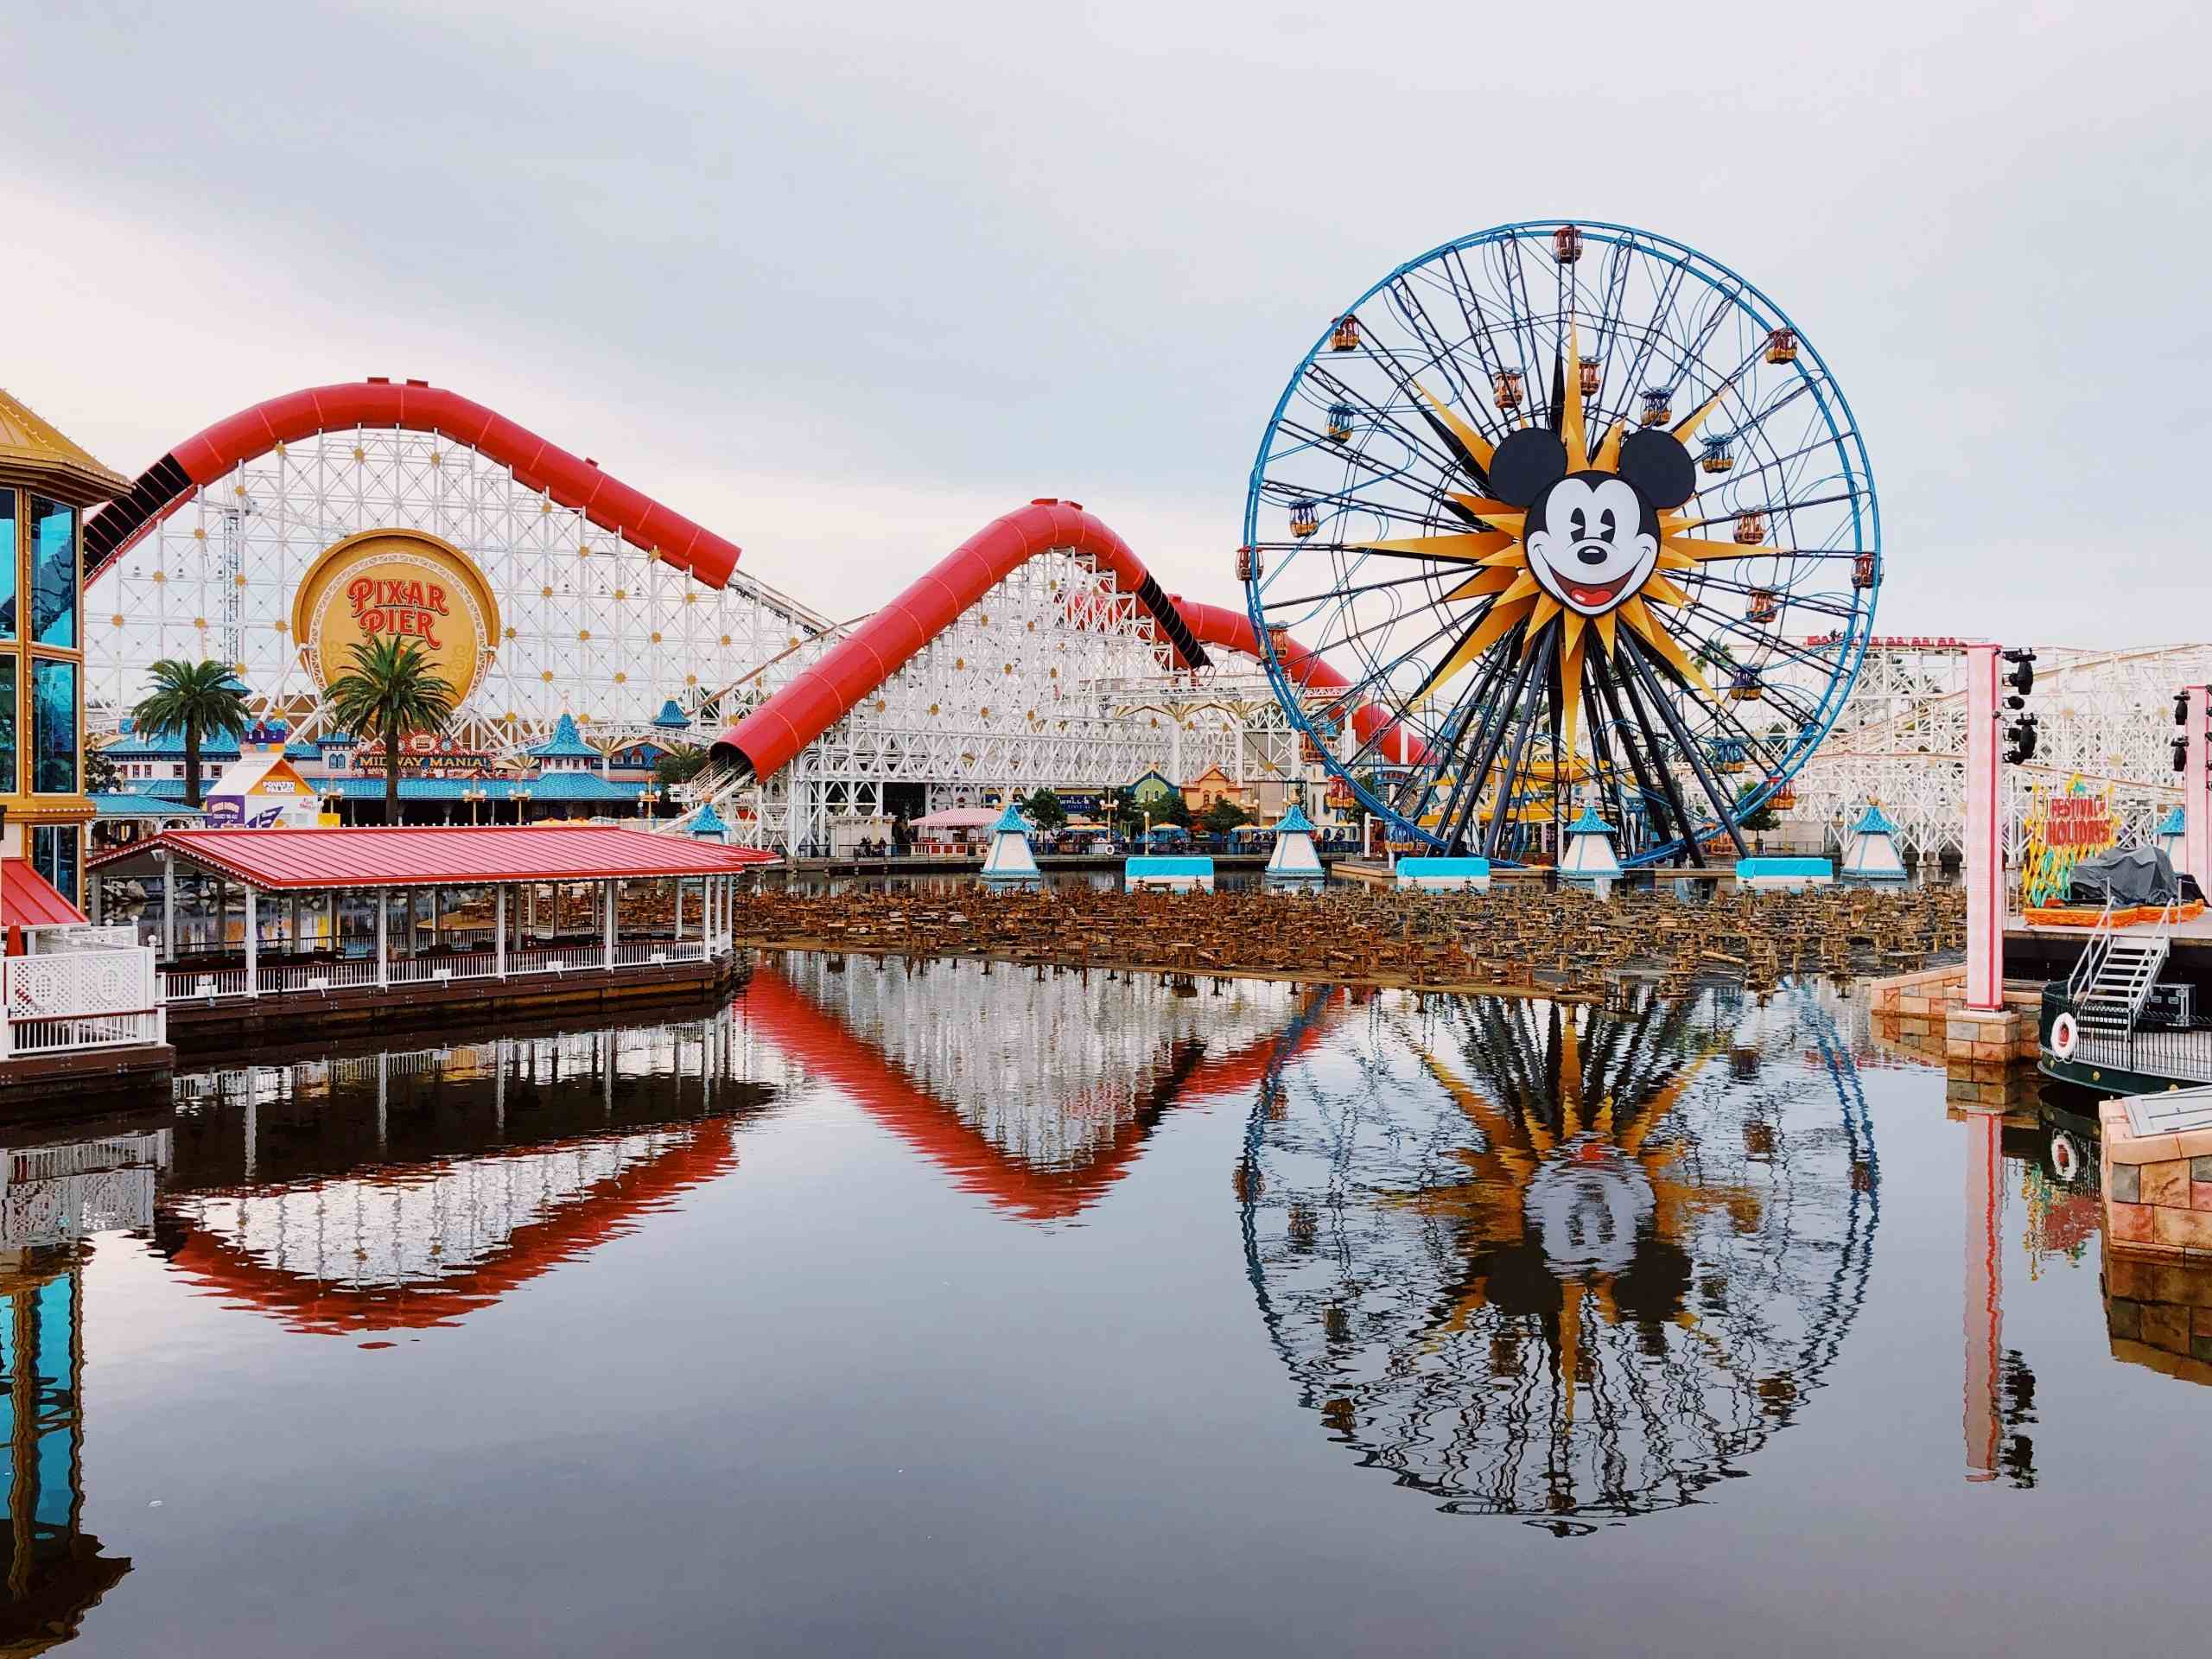 Disneyland rollercoaster and ferris wheel